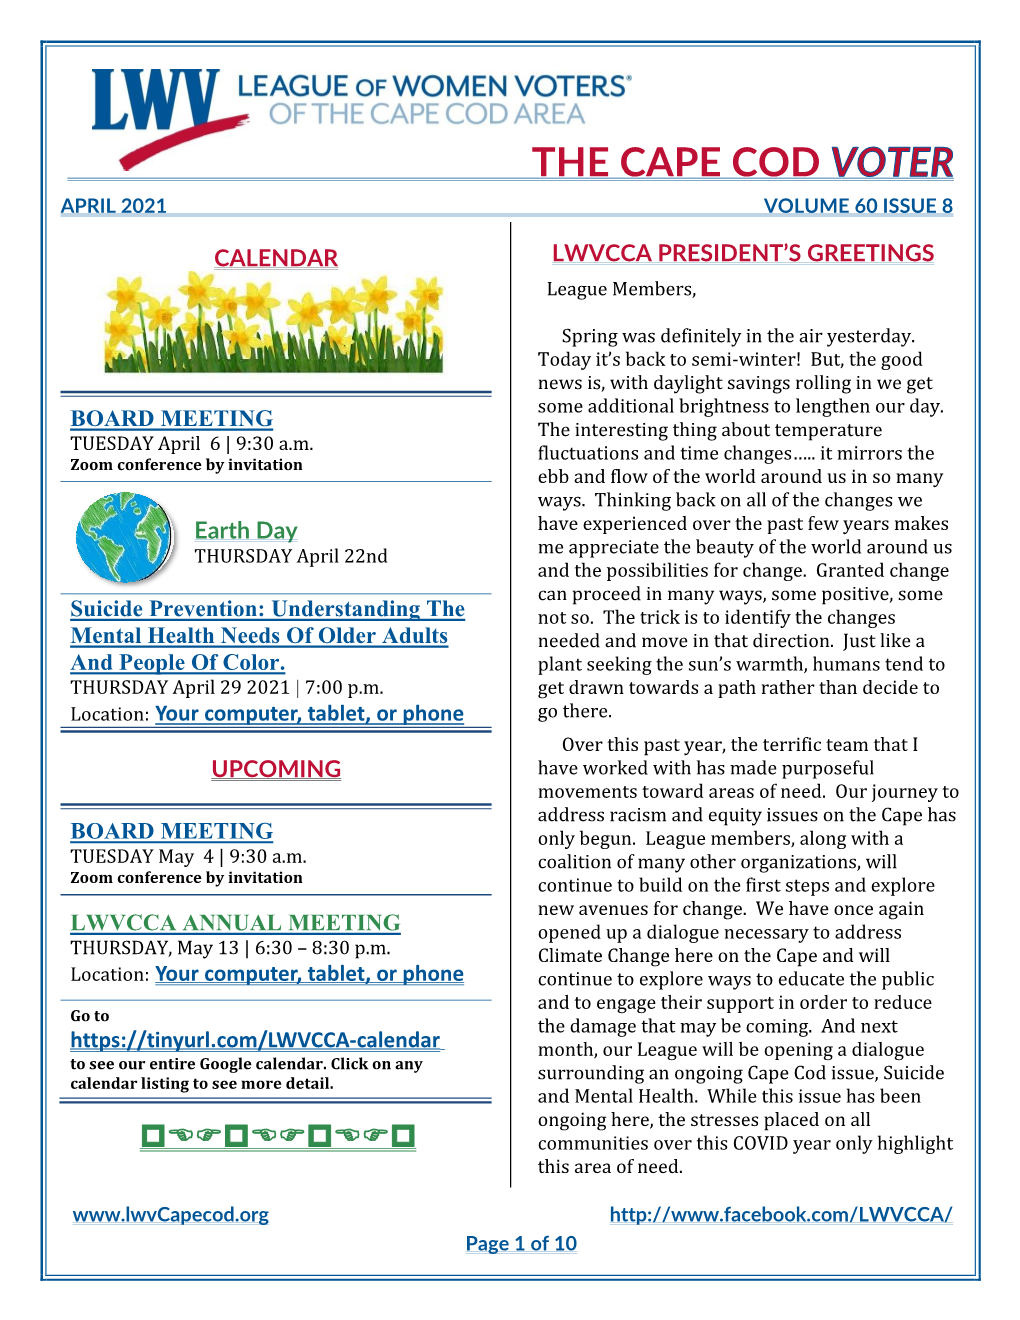 The Cape Cod April 2021 Volume 60 Issue 8